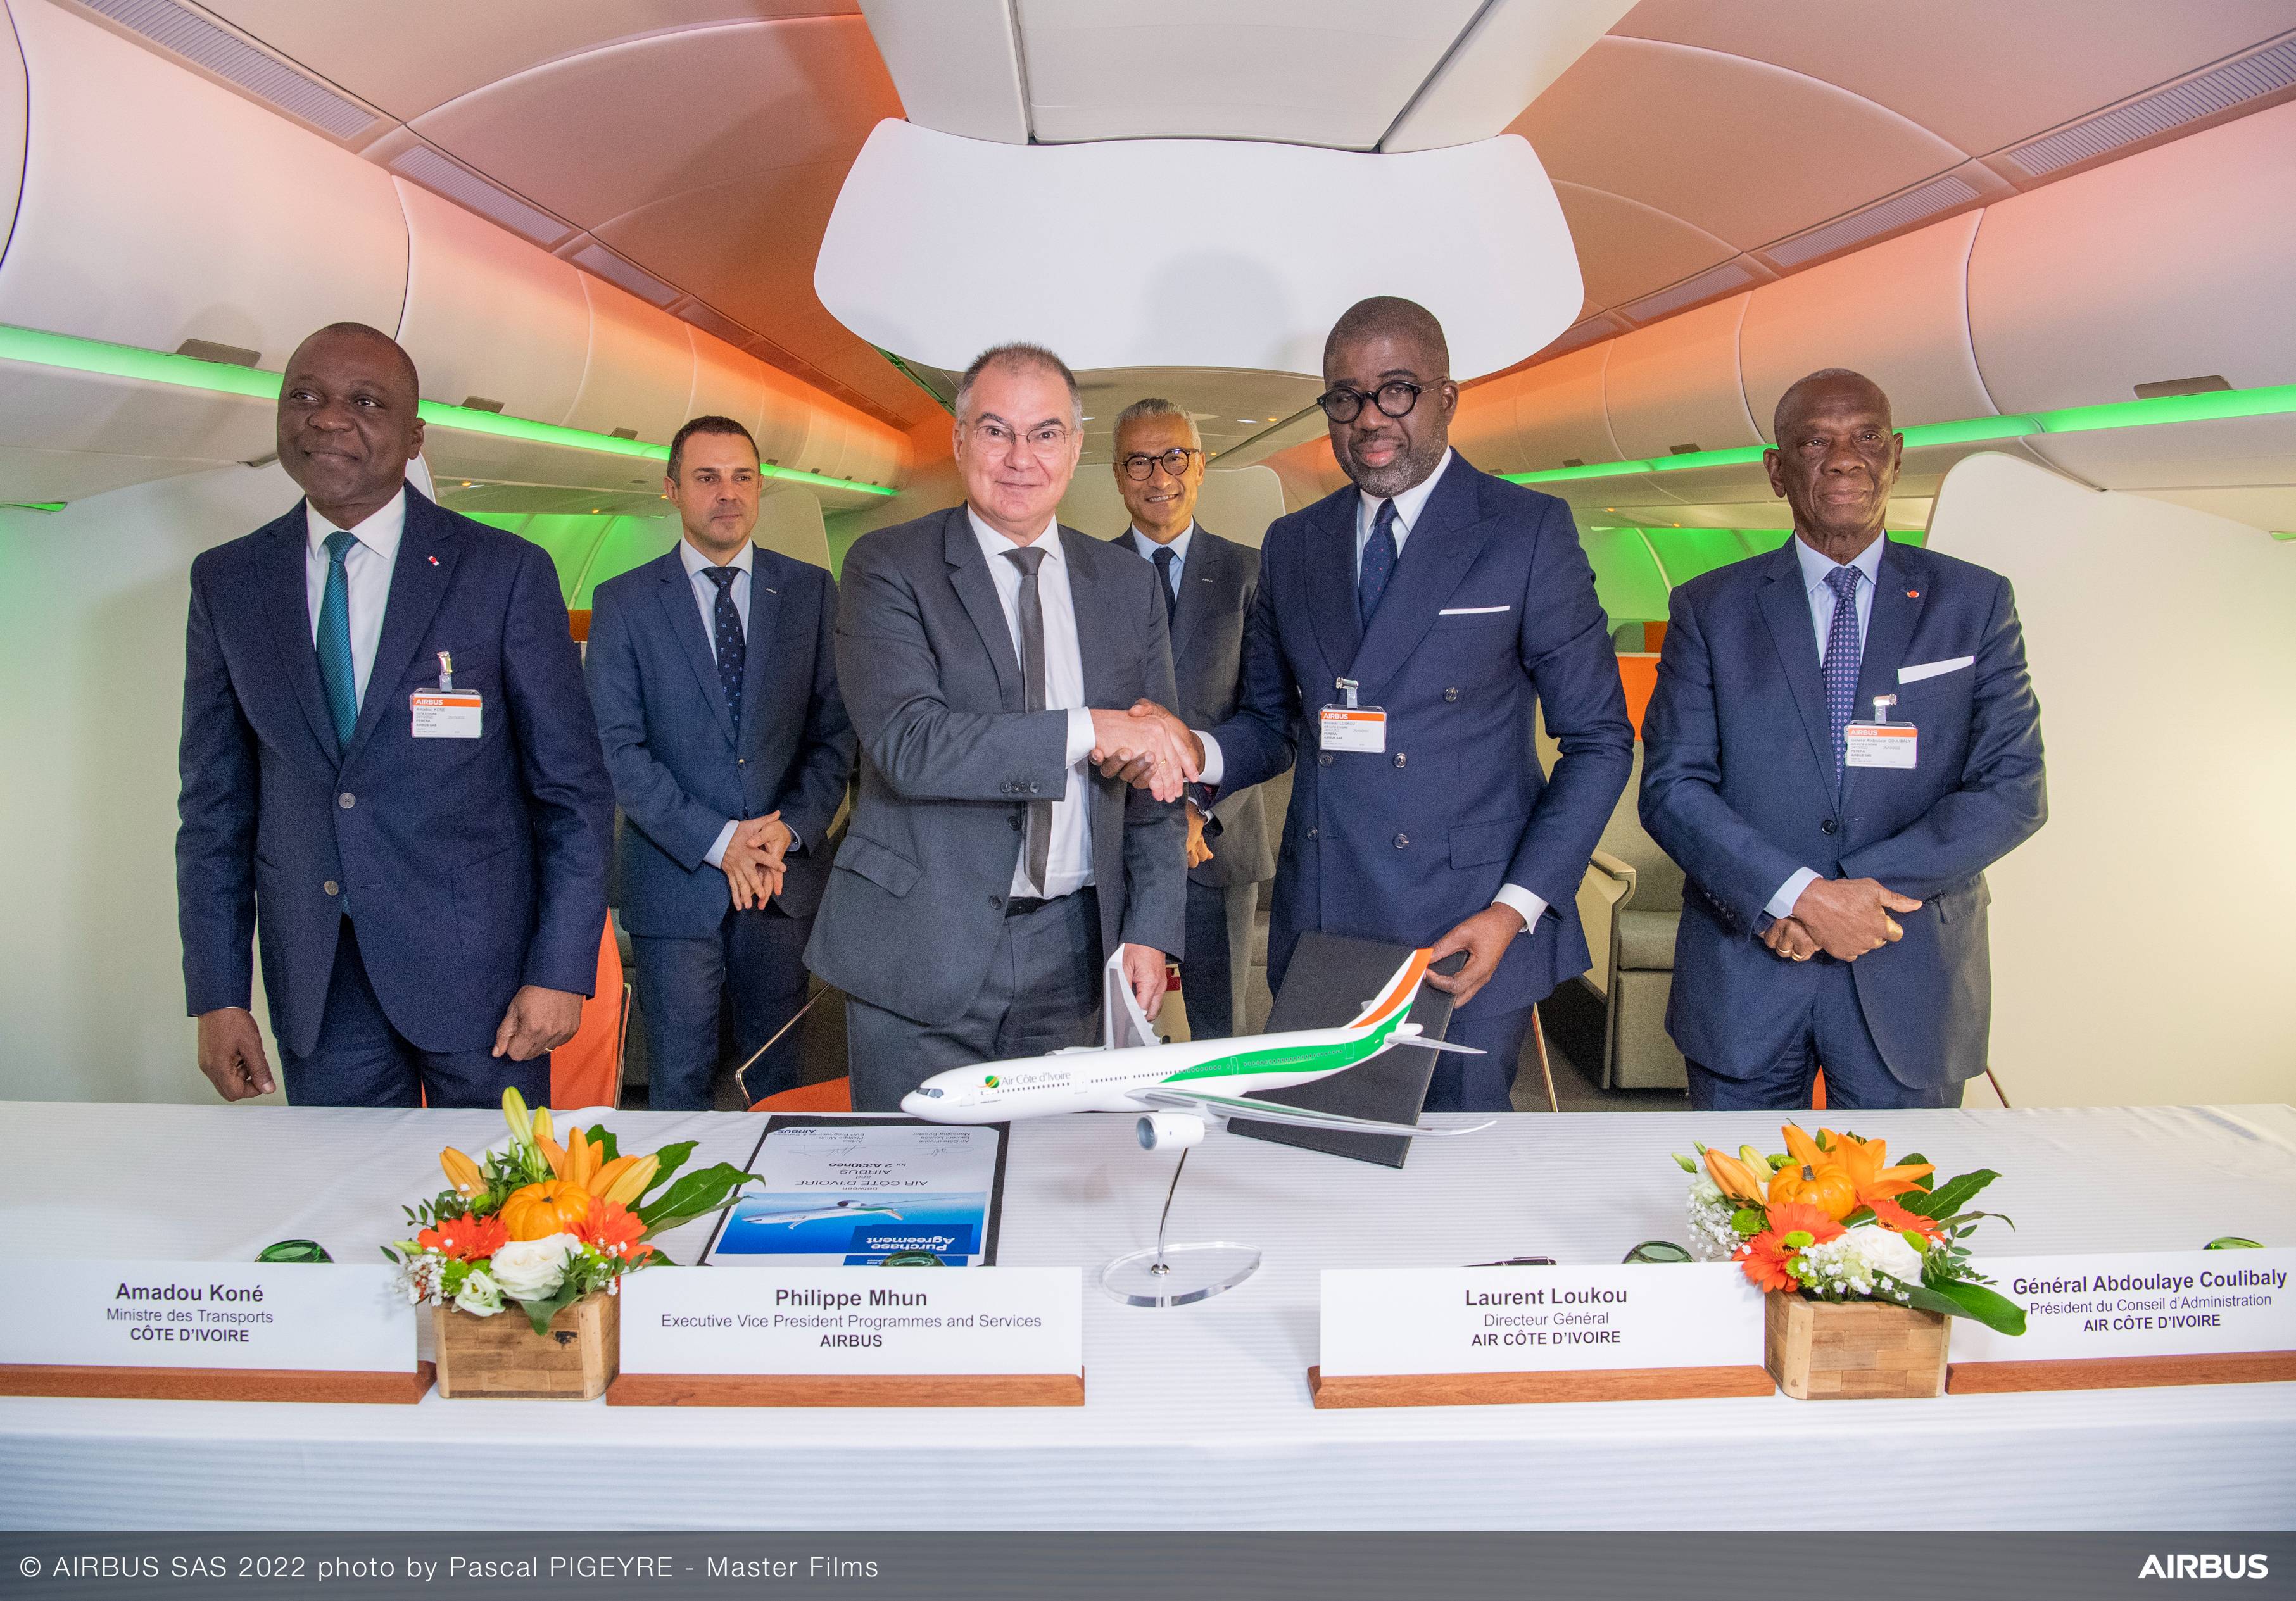 Air Côte d’Ivoire expands fleet,  network with A330neo aircraft